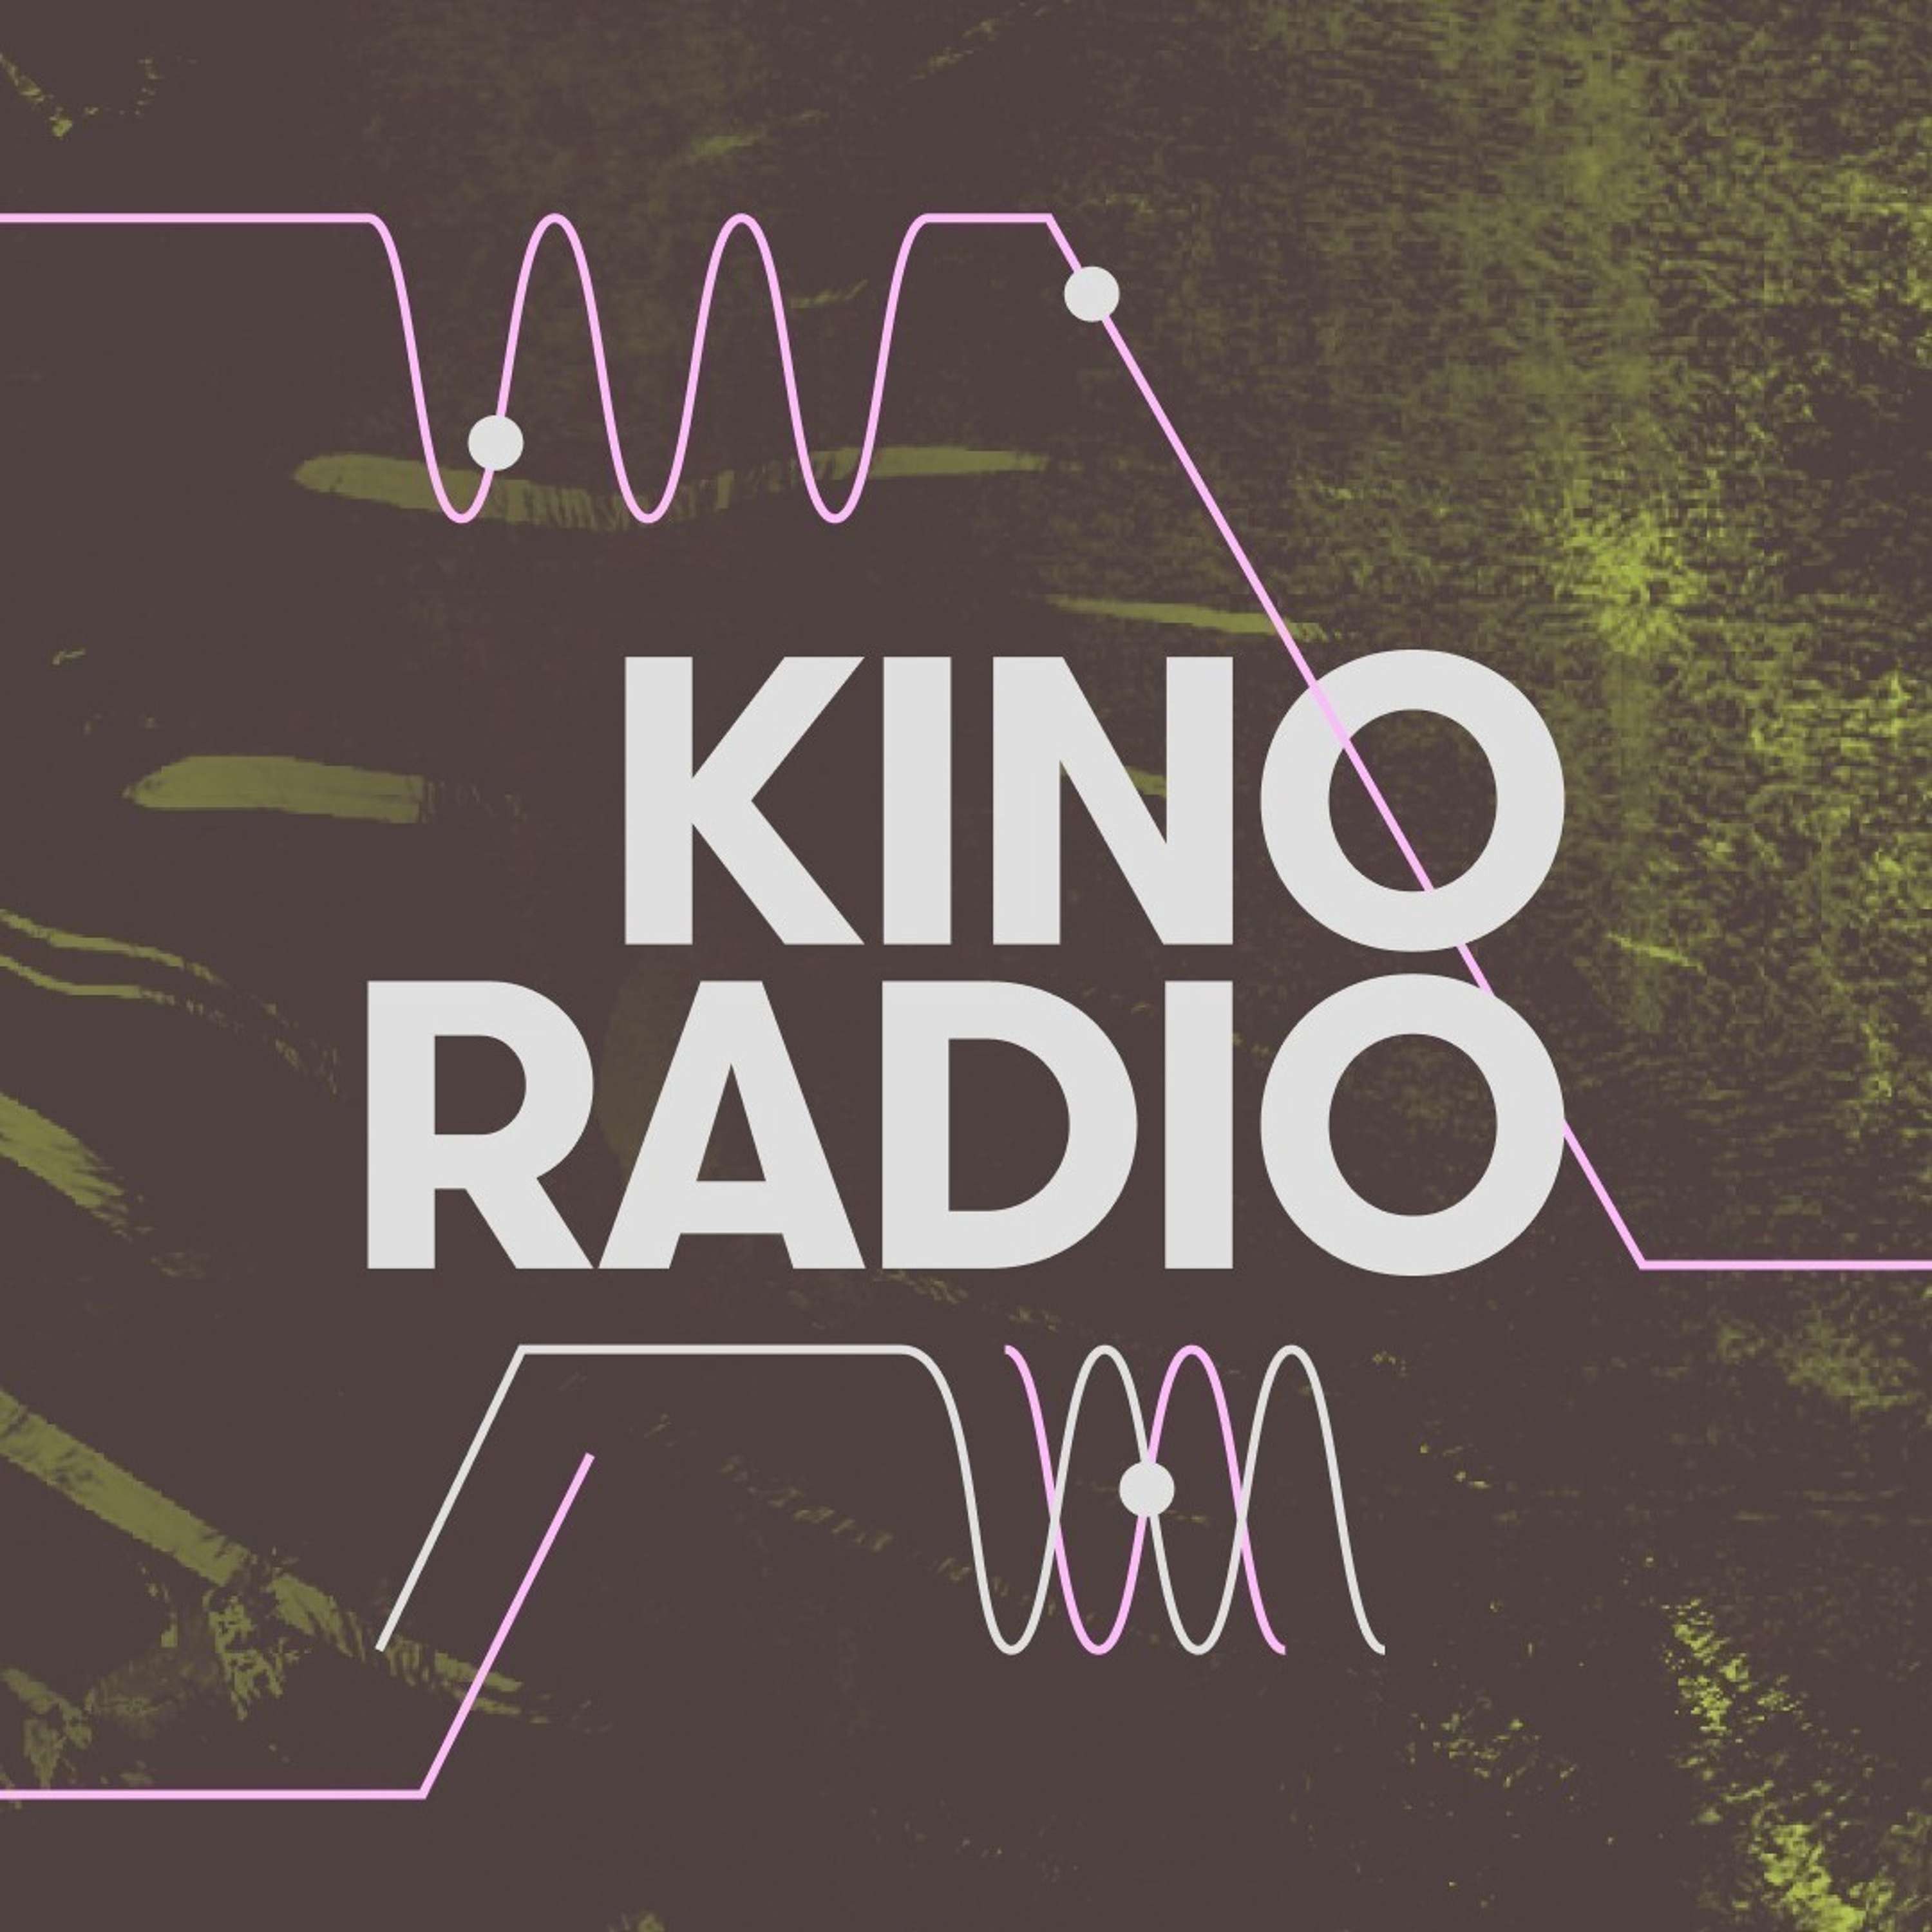 Kino-radio